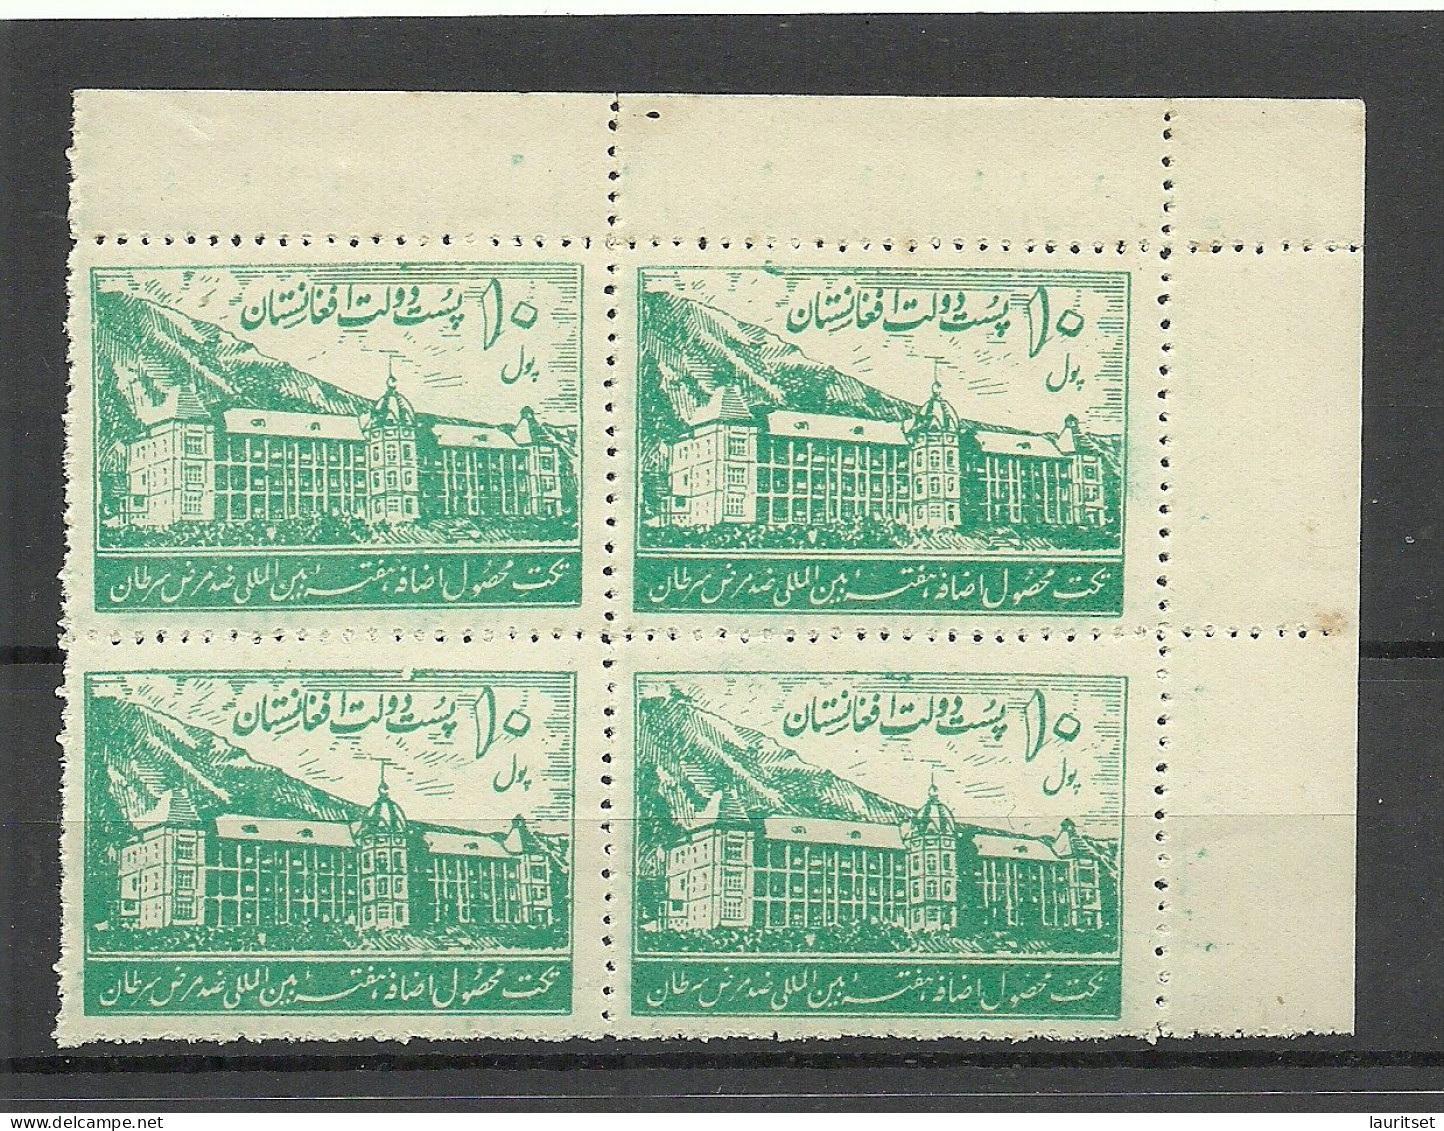 Afganistan 1938 Michel 1 Zwangszuschlagsmarke Für Antikrebsliga For Fight With Cancer As 4-bclock MNH - Afghanistan